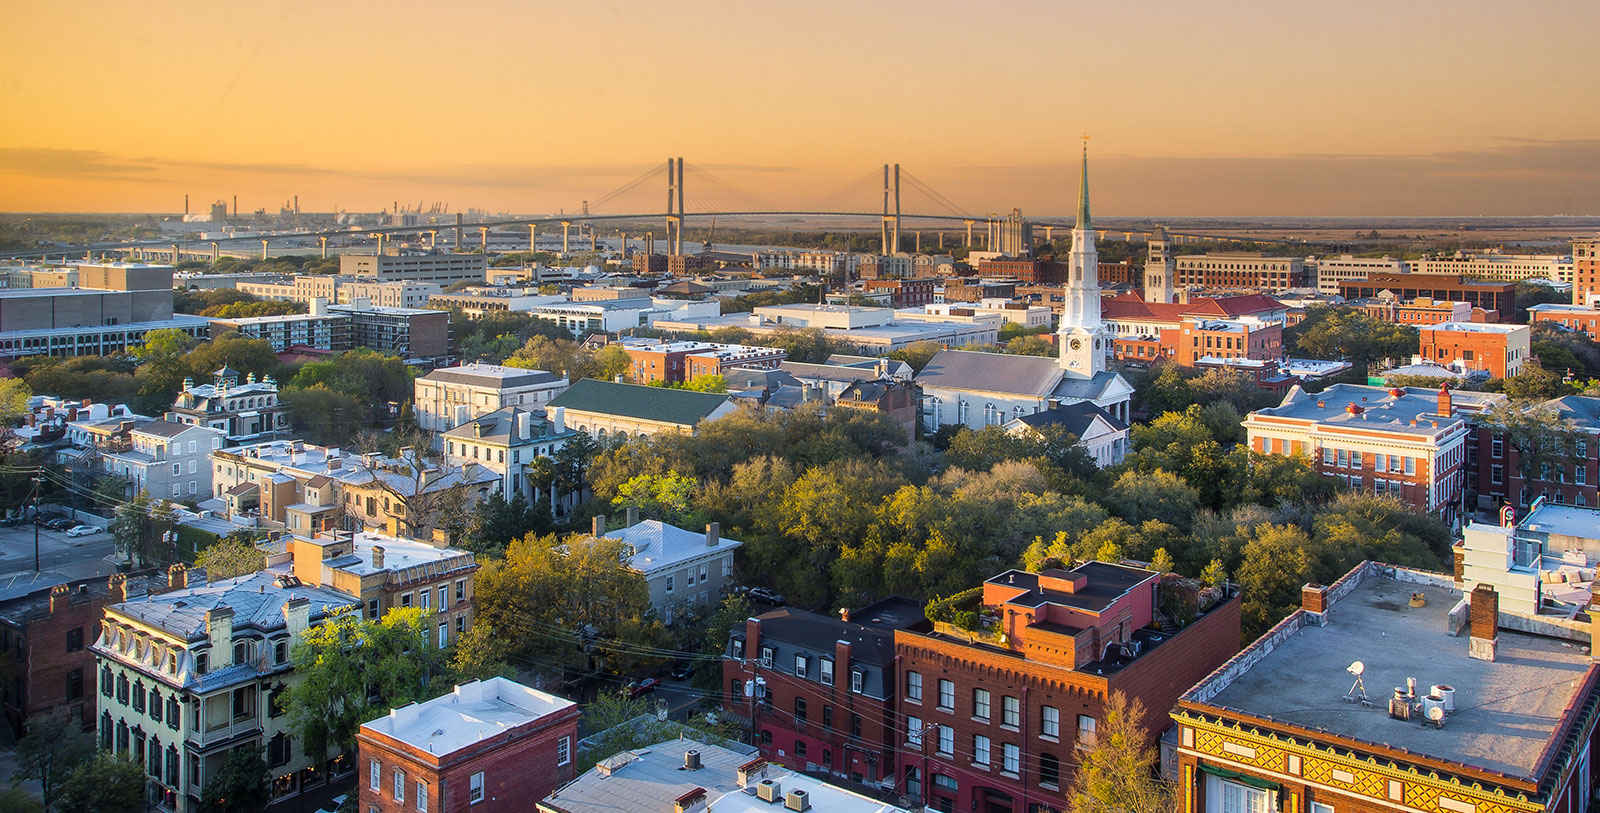 Explore Savannah’s historic street-grid system, recognized as a National Historic Landmark.